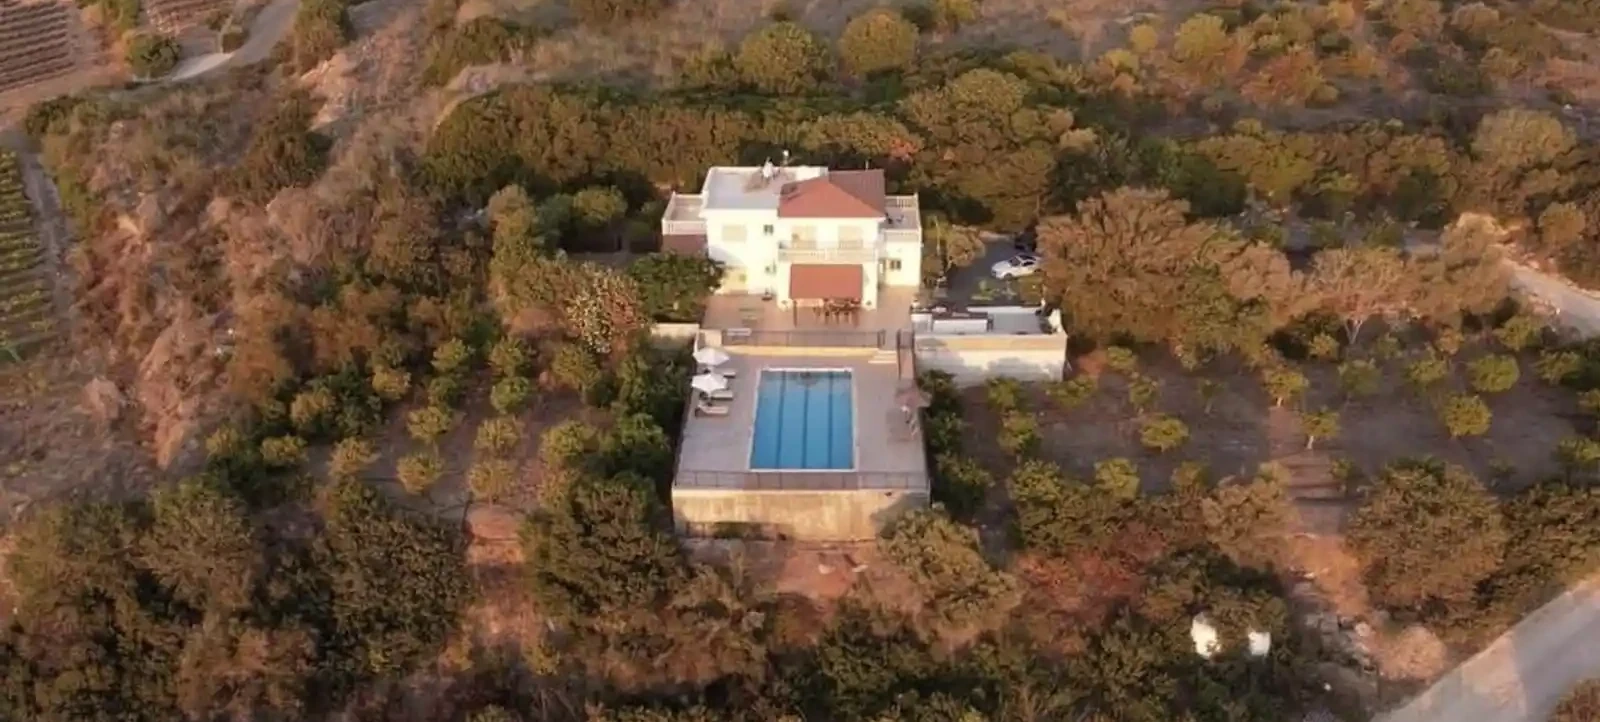 5-bedroom villa fоr sаle €1.400.000, image 1